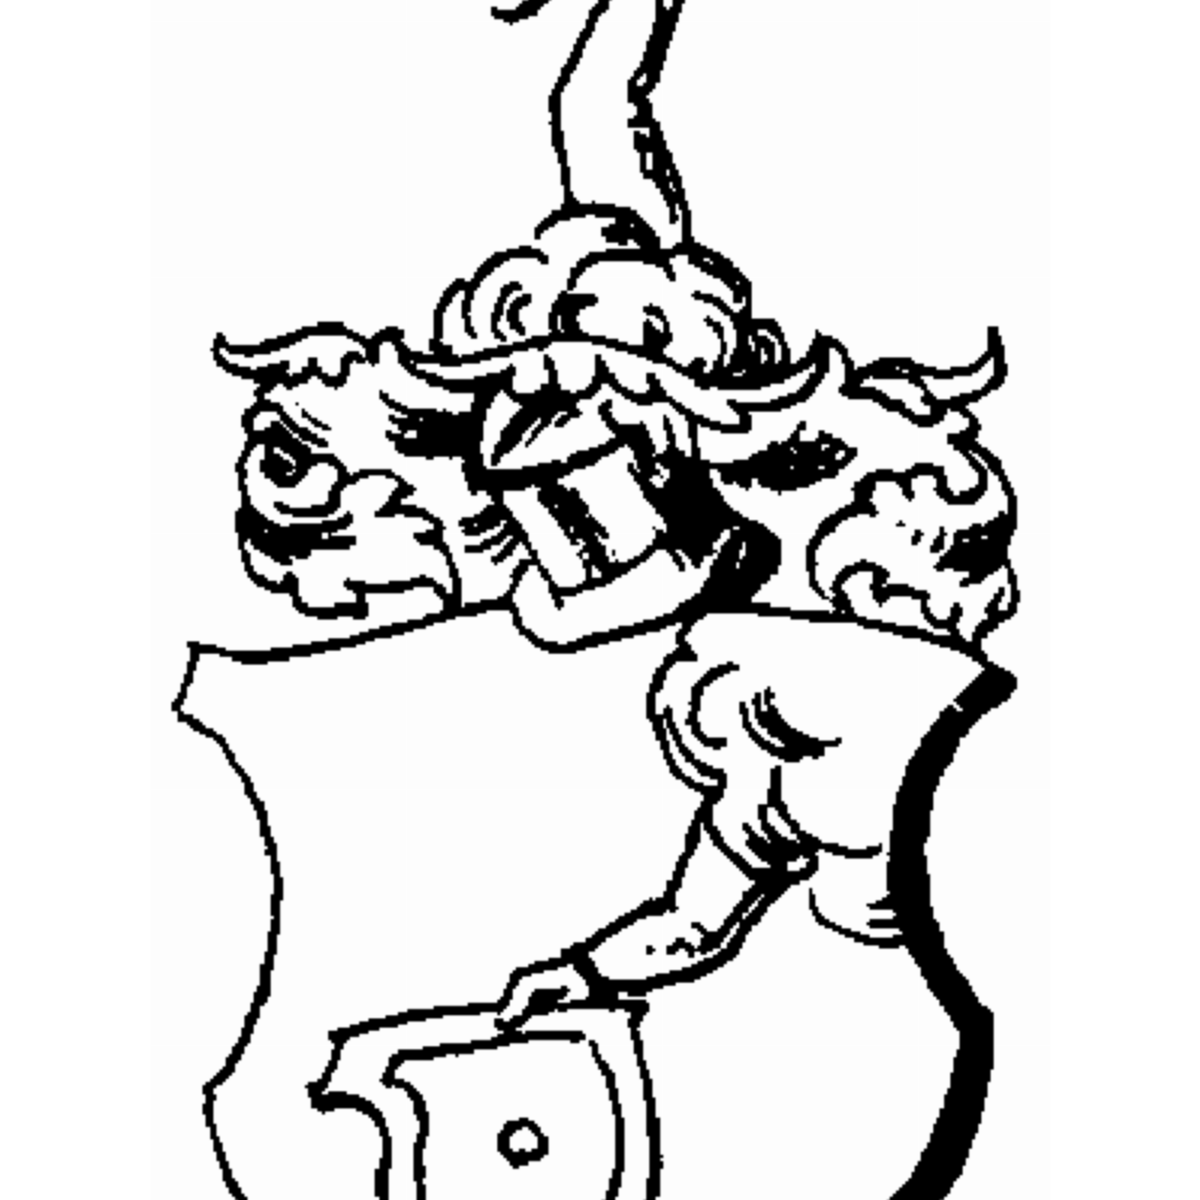 Wappen der Familie Genet